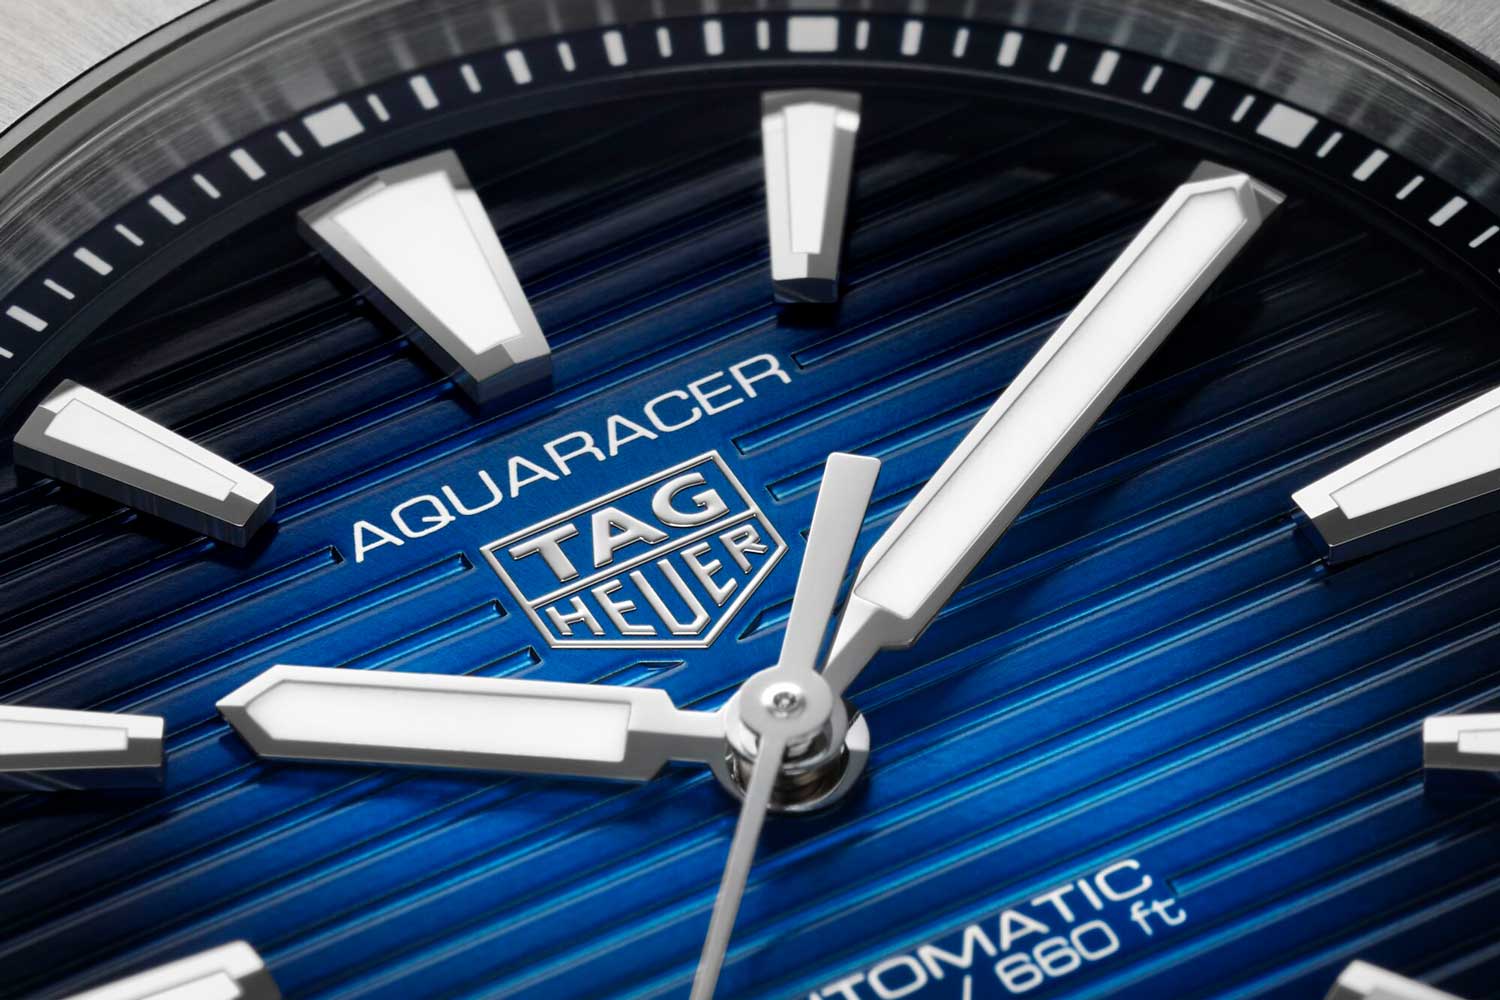 Aquaracer Professional 200 40mm Automatic, ref. WBP2111.BA0627